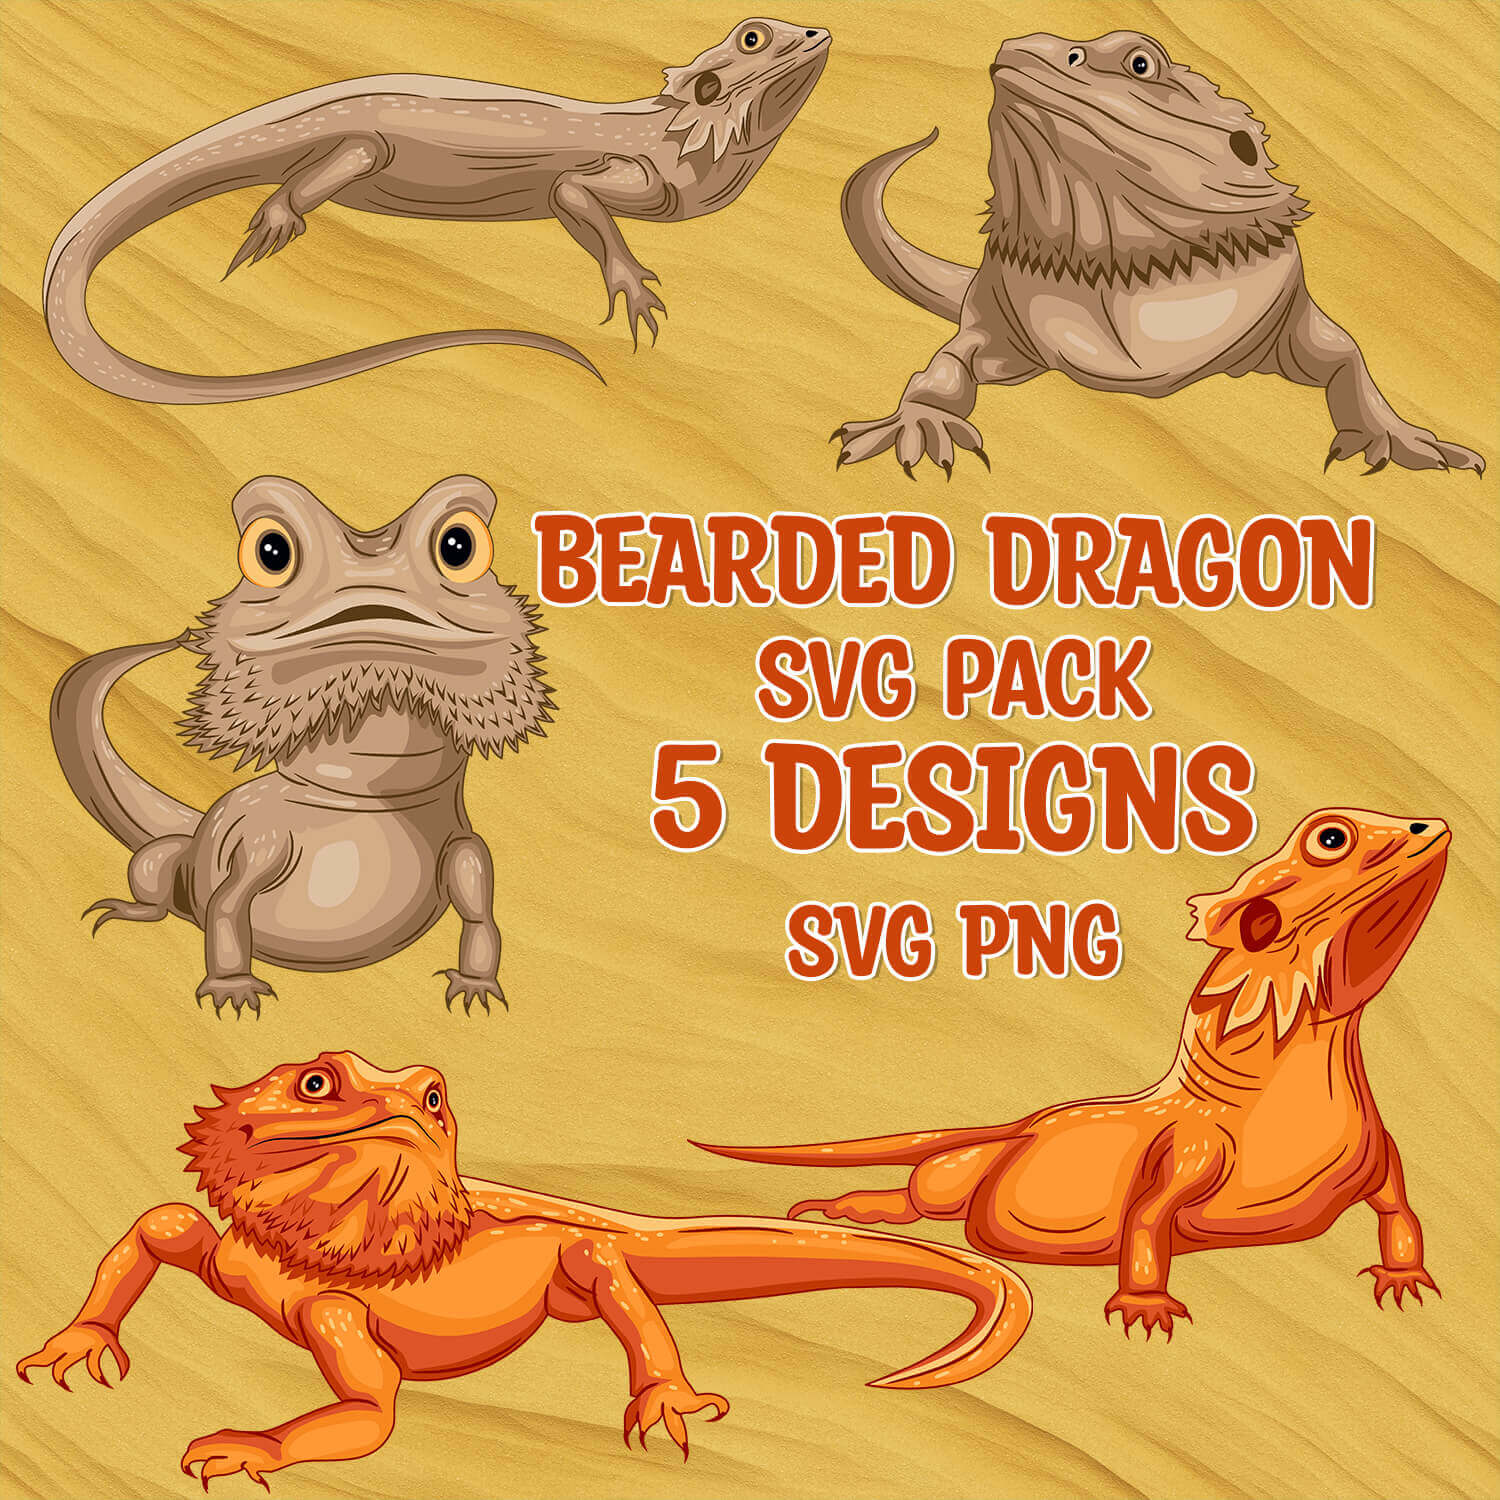 5 Designs of Bearded Dragon SVG.